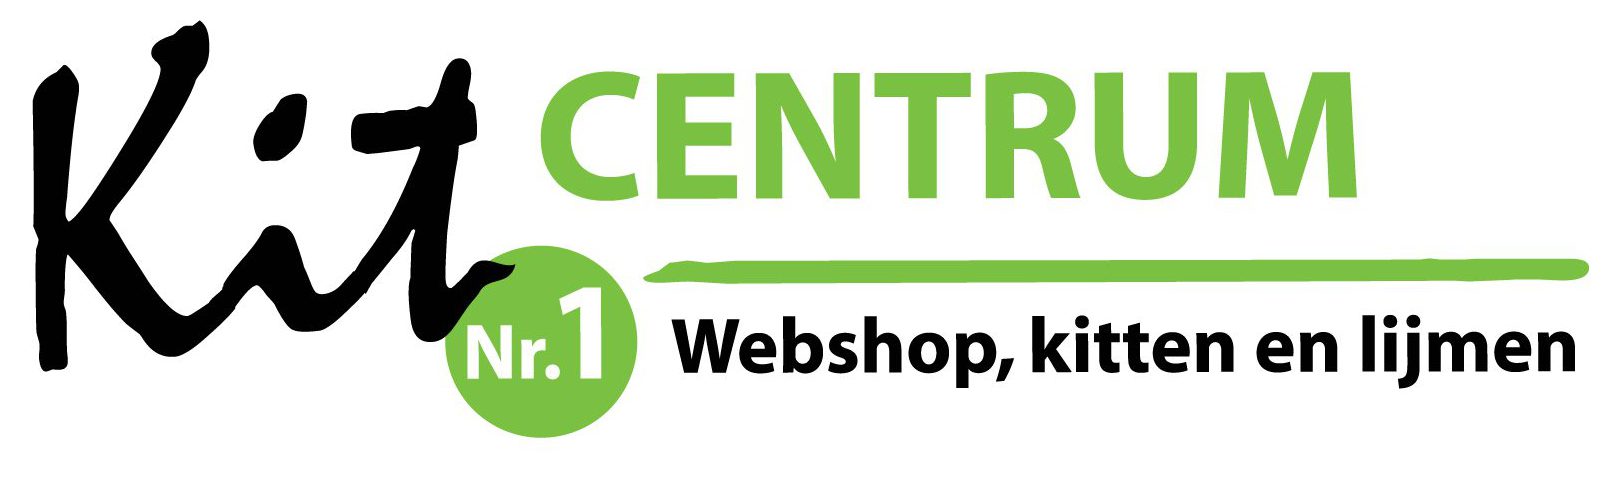 Kitcentrum logo